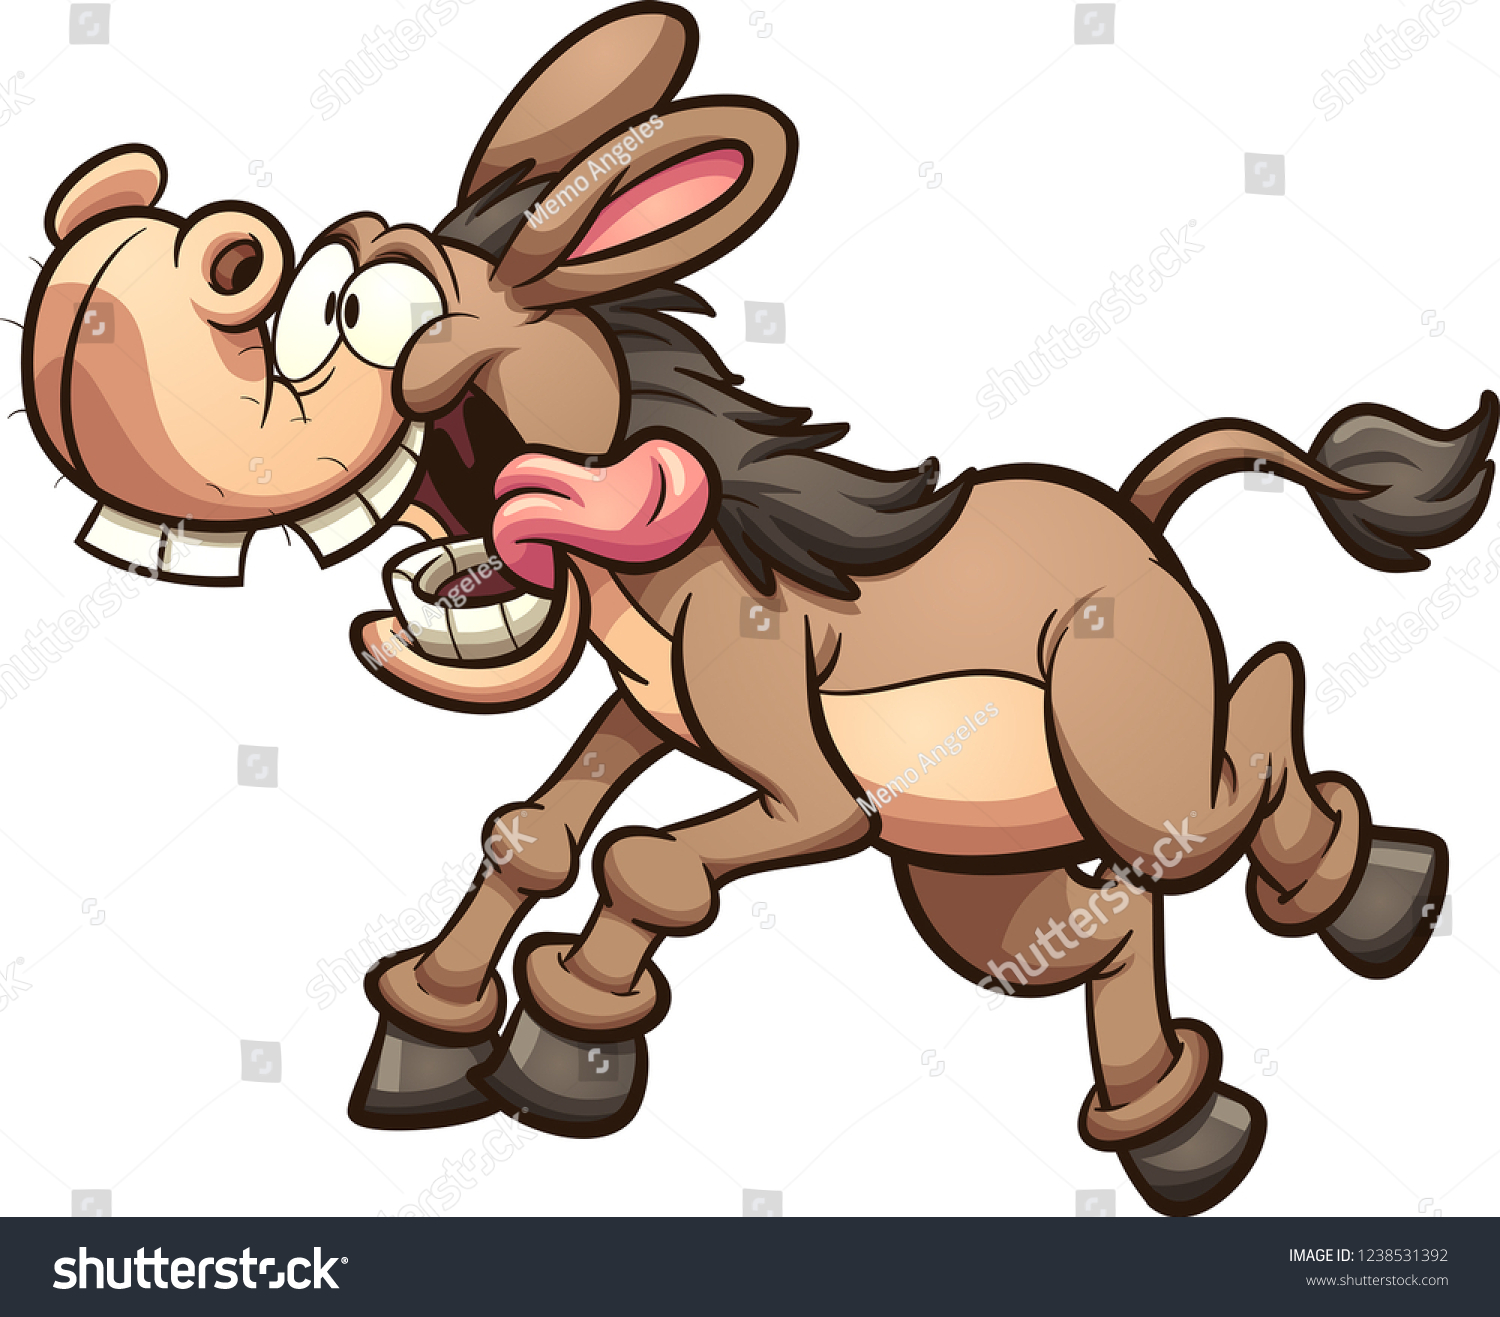 1,663 Donkey running Images, Stock Photos & Vectors | Shutterstock